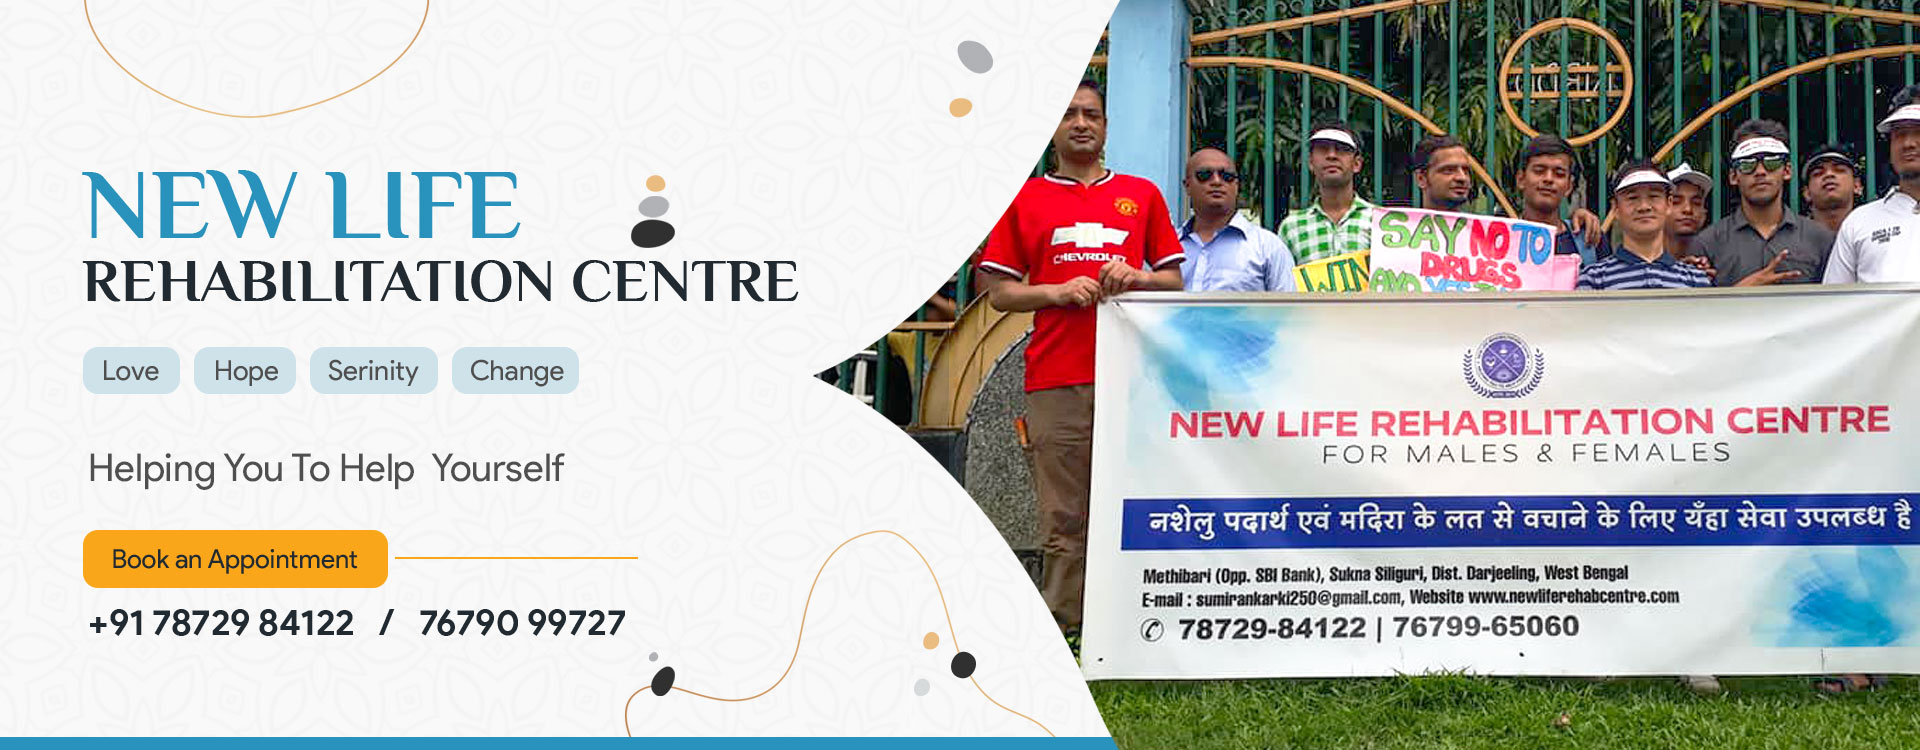 New Life Rehabilitation Centre